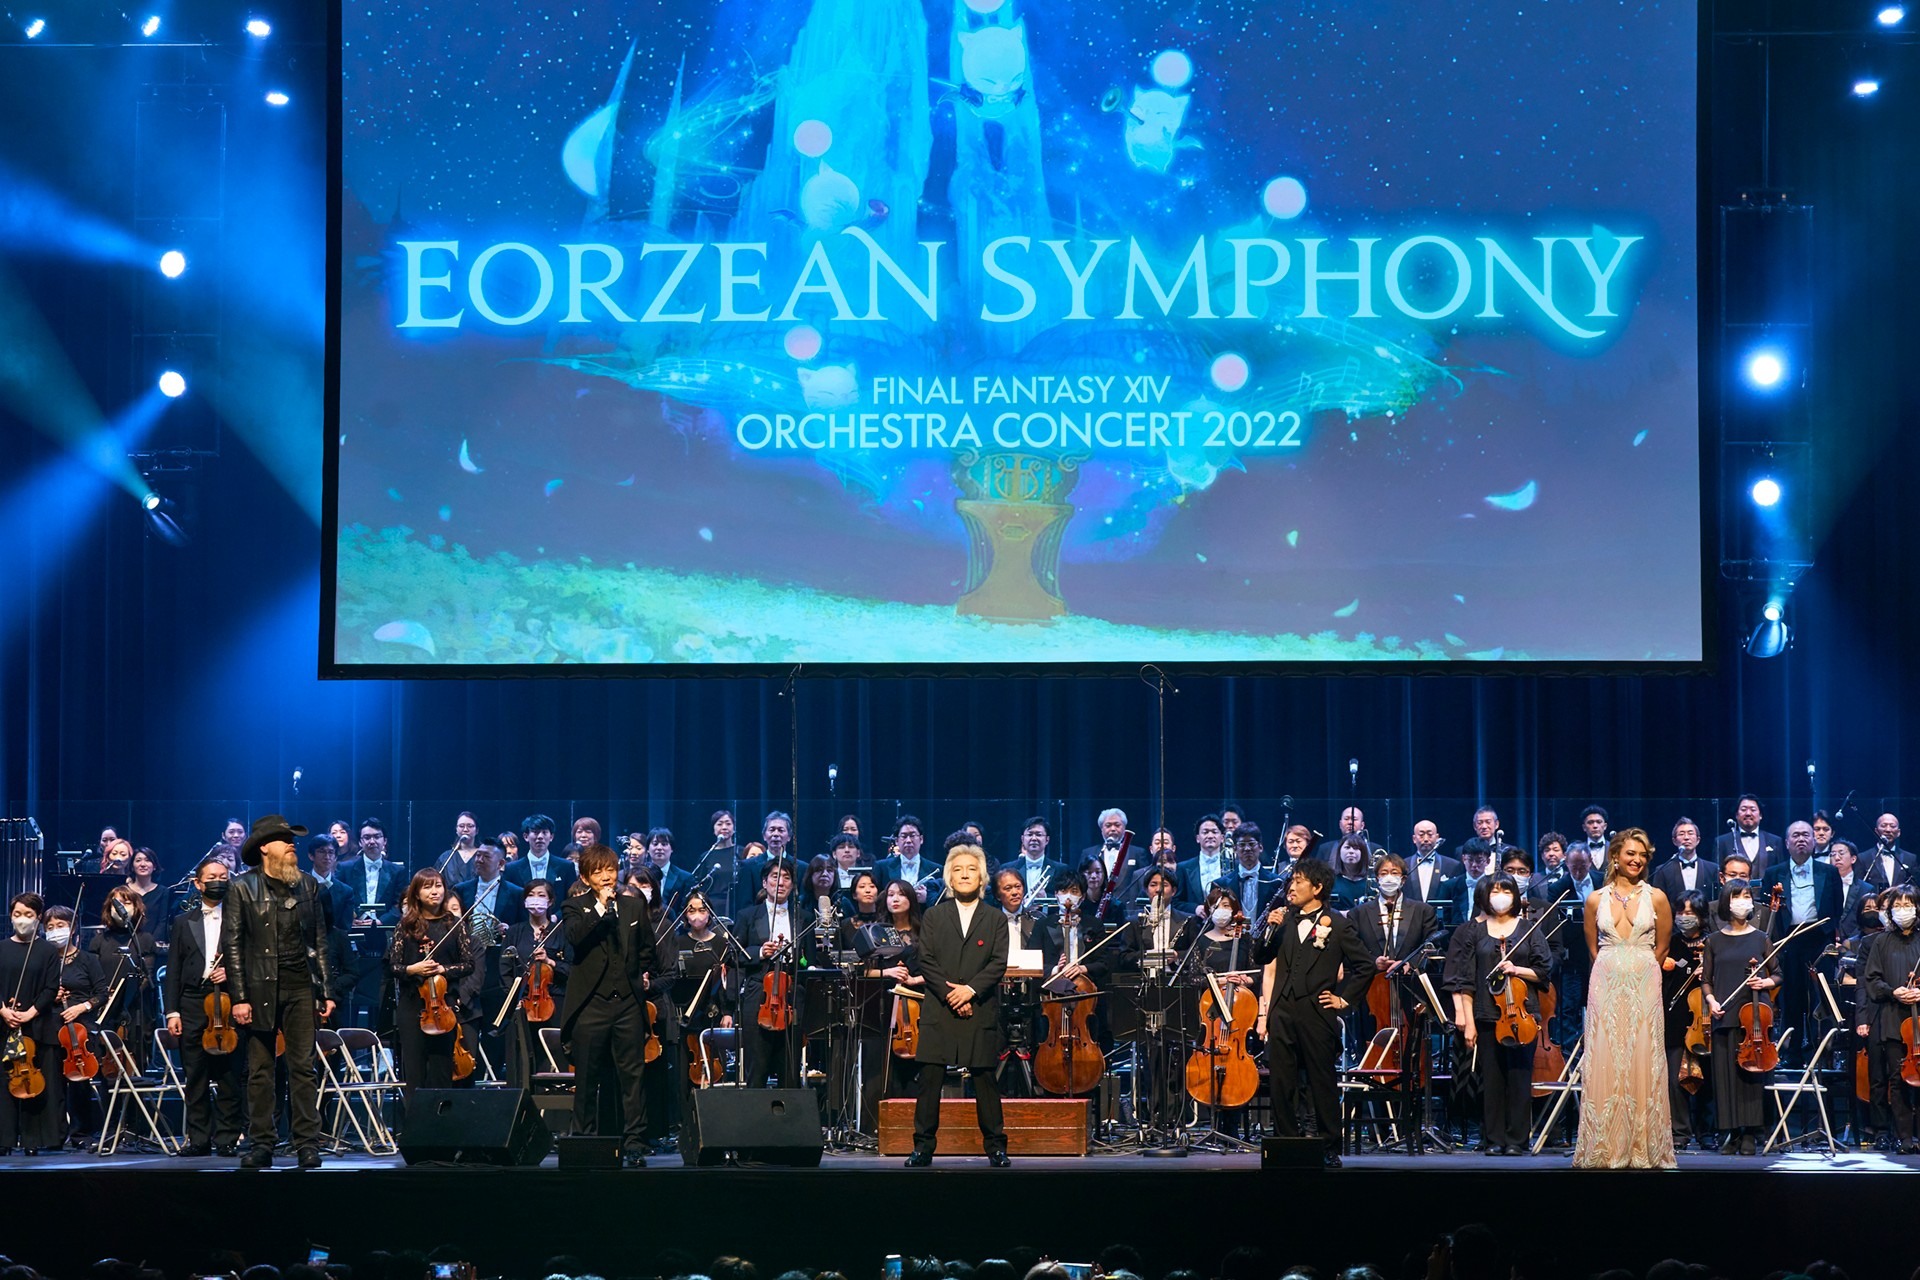 「FFXIV ORCHESTRA CONCERT 2022」報導 以交響樂演奏回顧十年旅程《FINAL FANTASY XIV